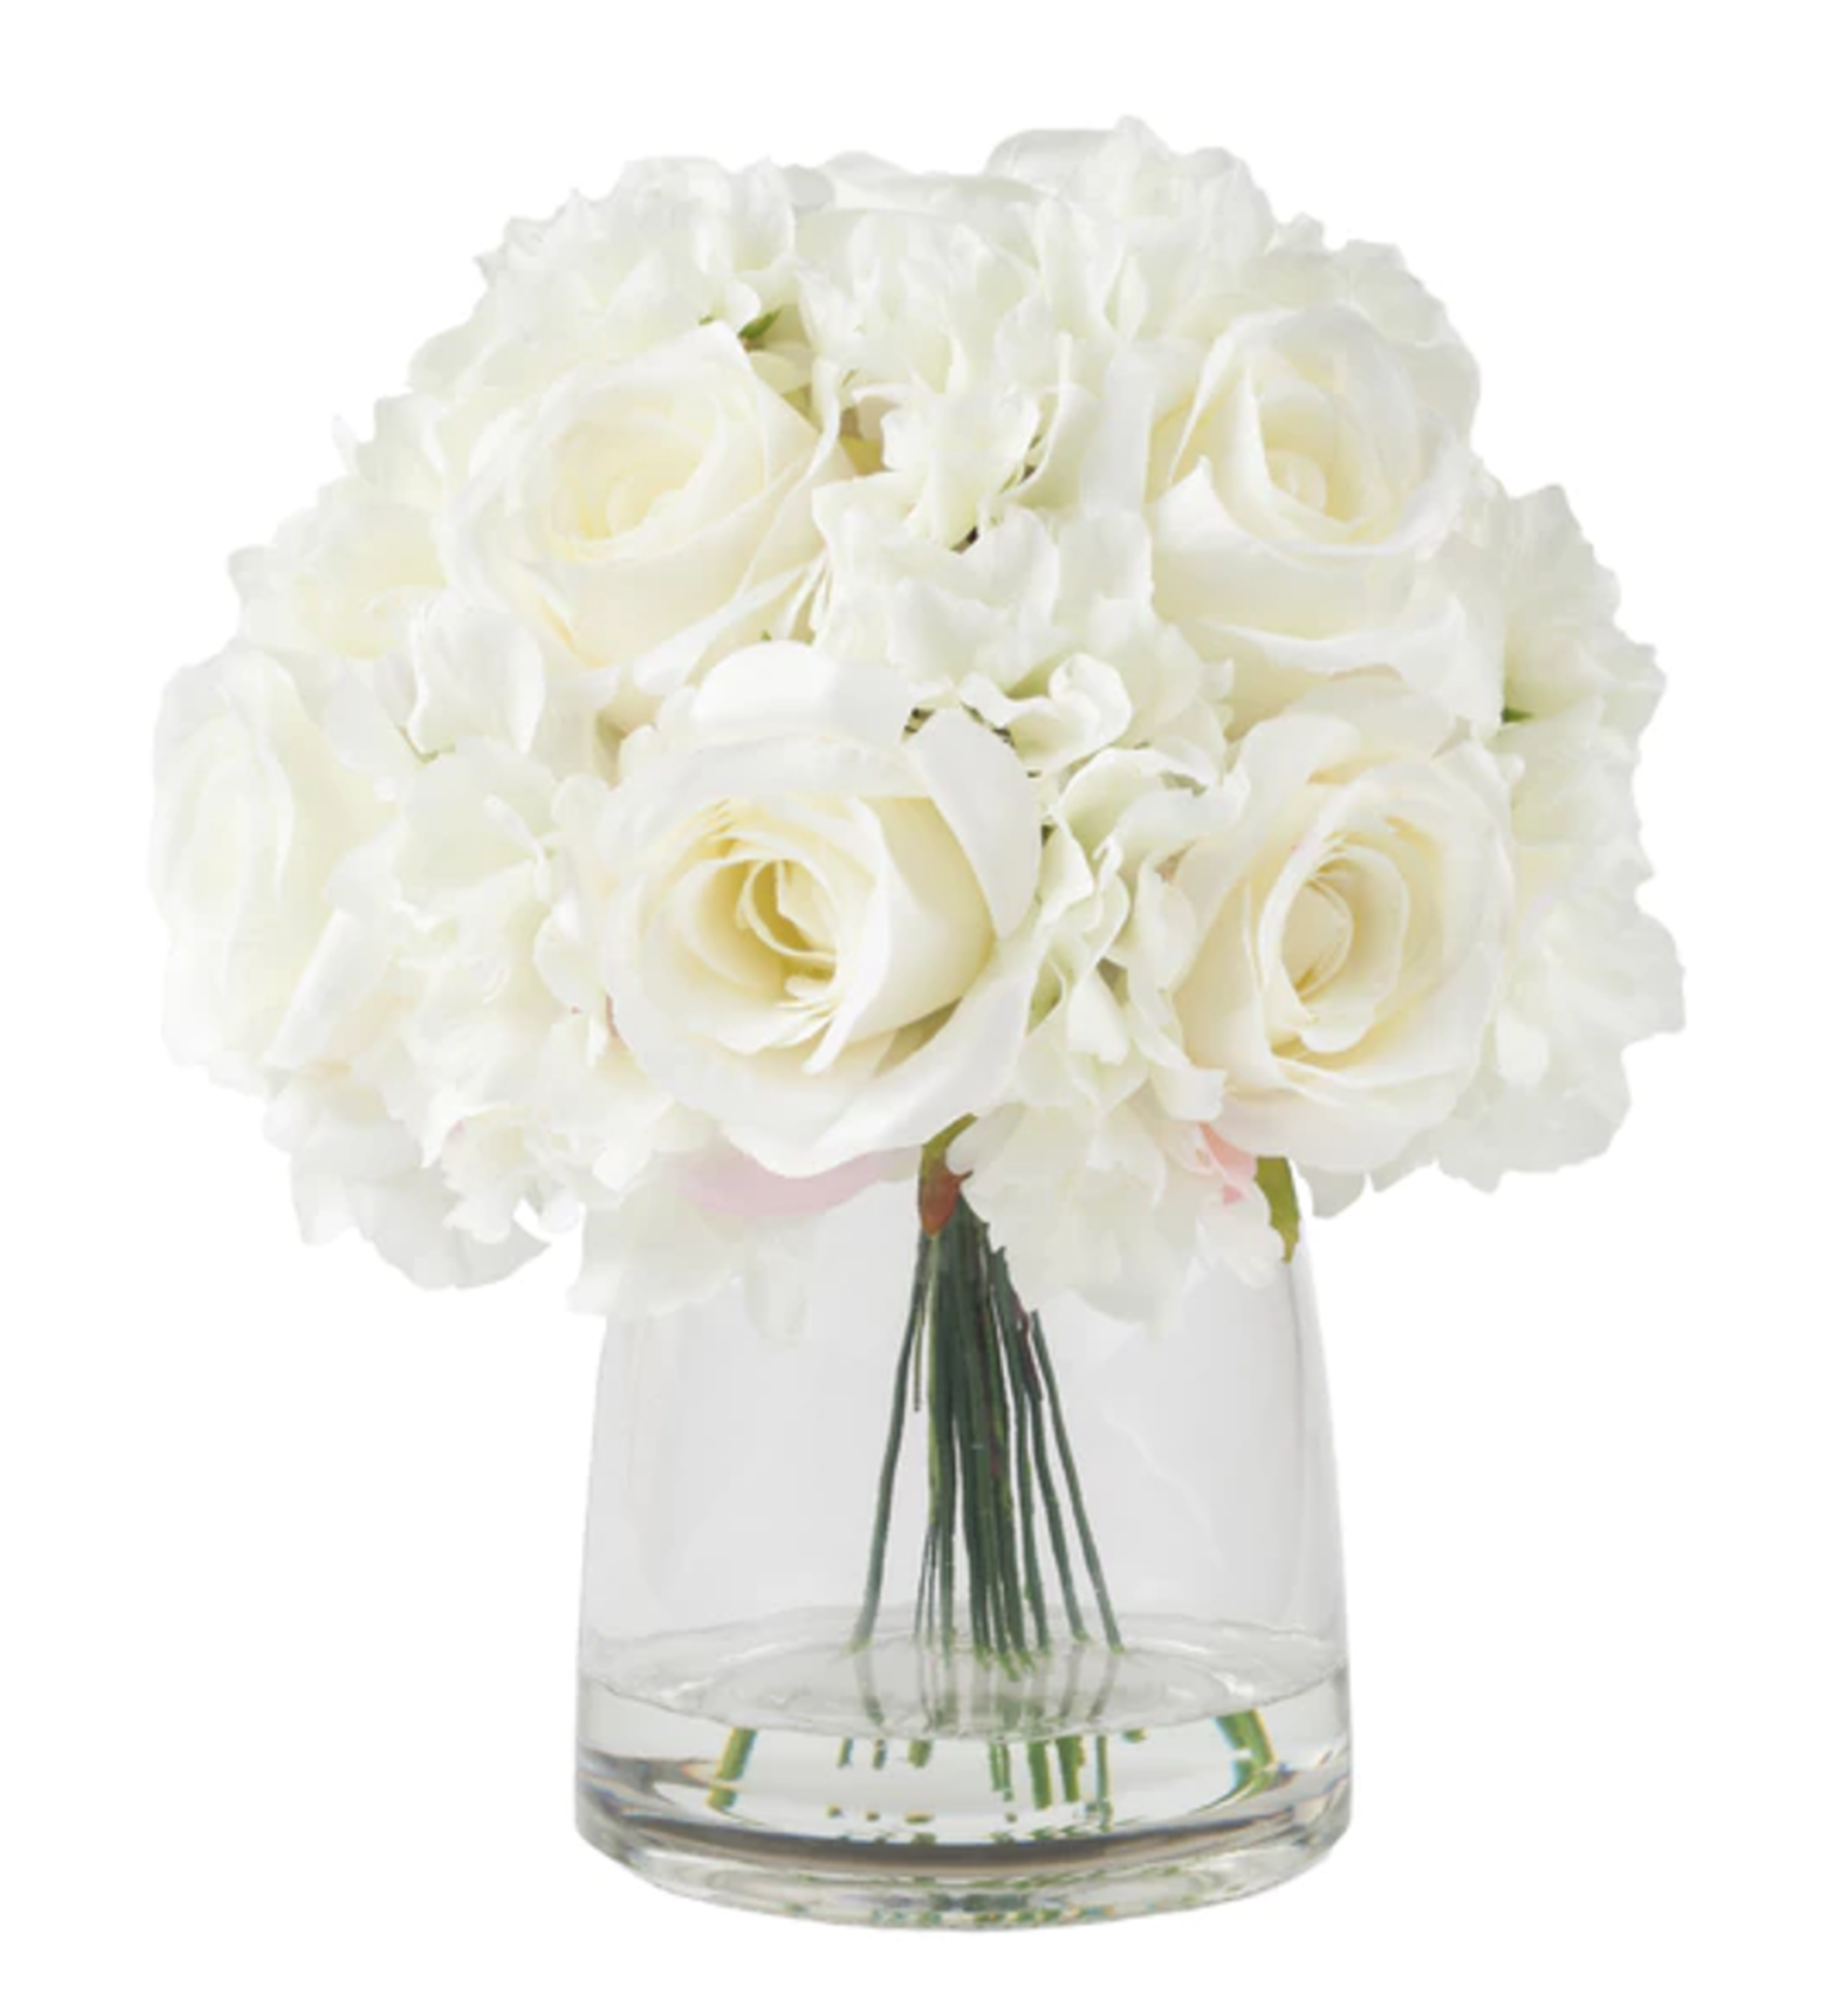 Pure Garden Hydrangea and Rose Floral Arrangement with Vase - Cream - Overstock